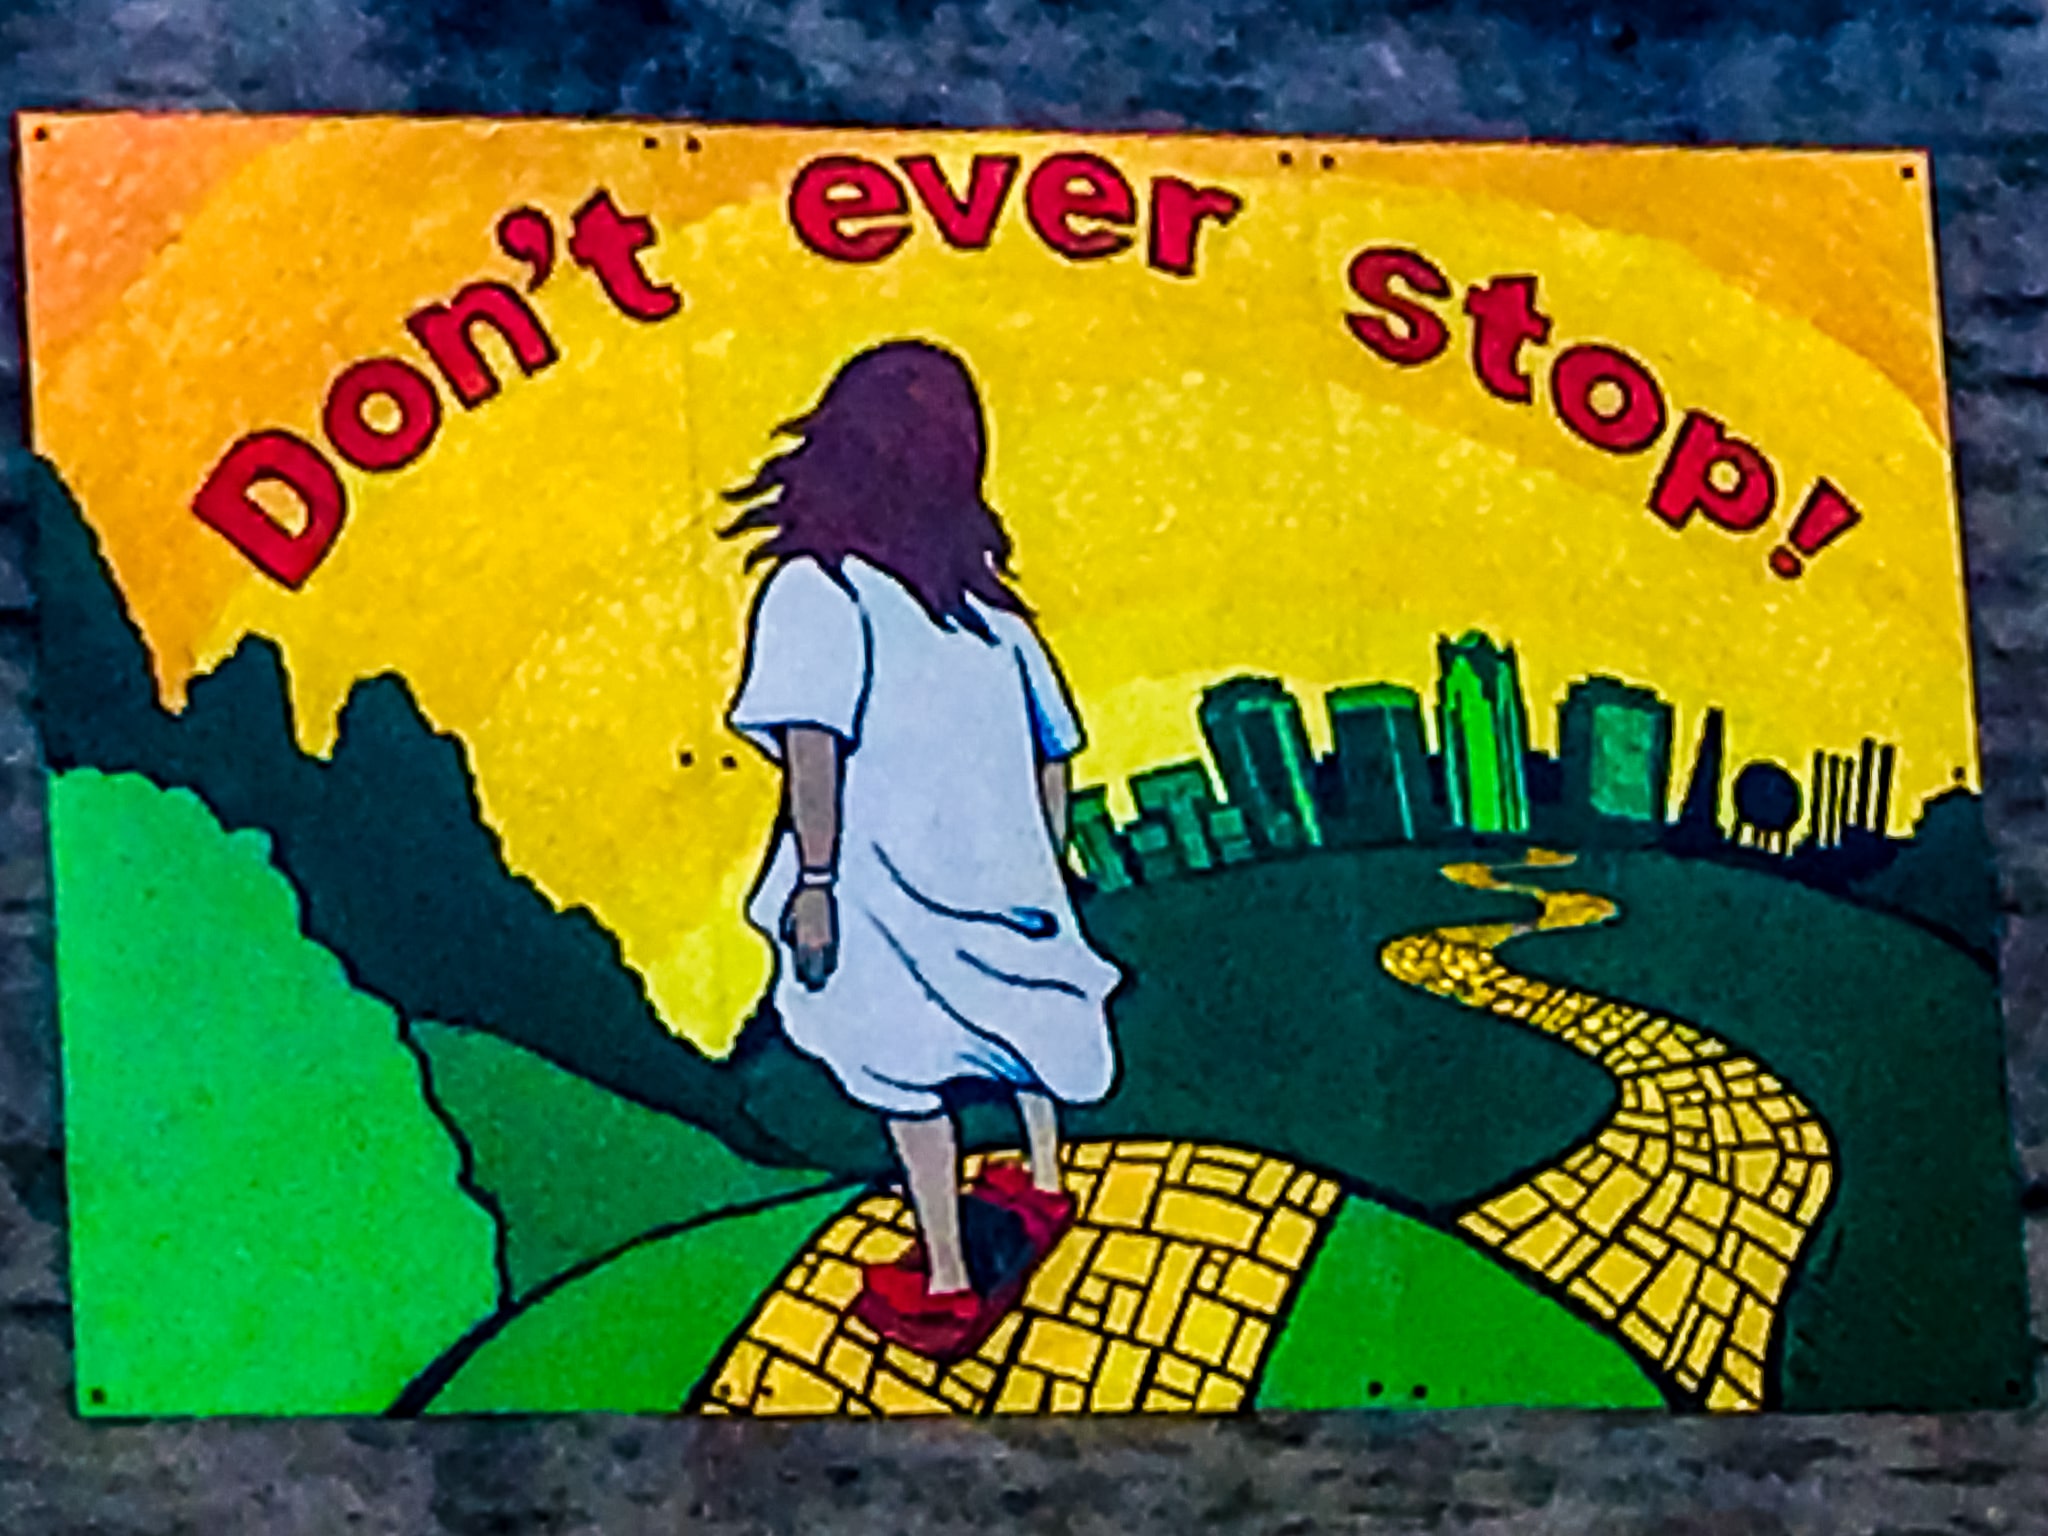 OneWheelJesus 190227 140922 "Don't ever stop" mural of Mark Lindsey, aka Onewheel Jesus inspires all in downtown Birmingham